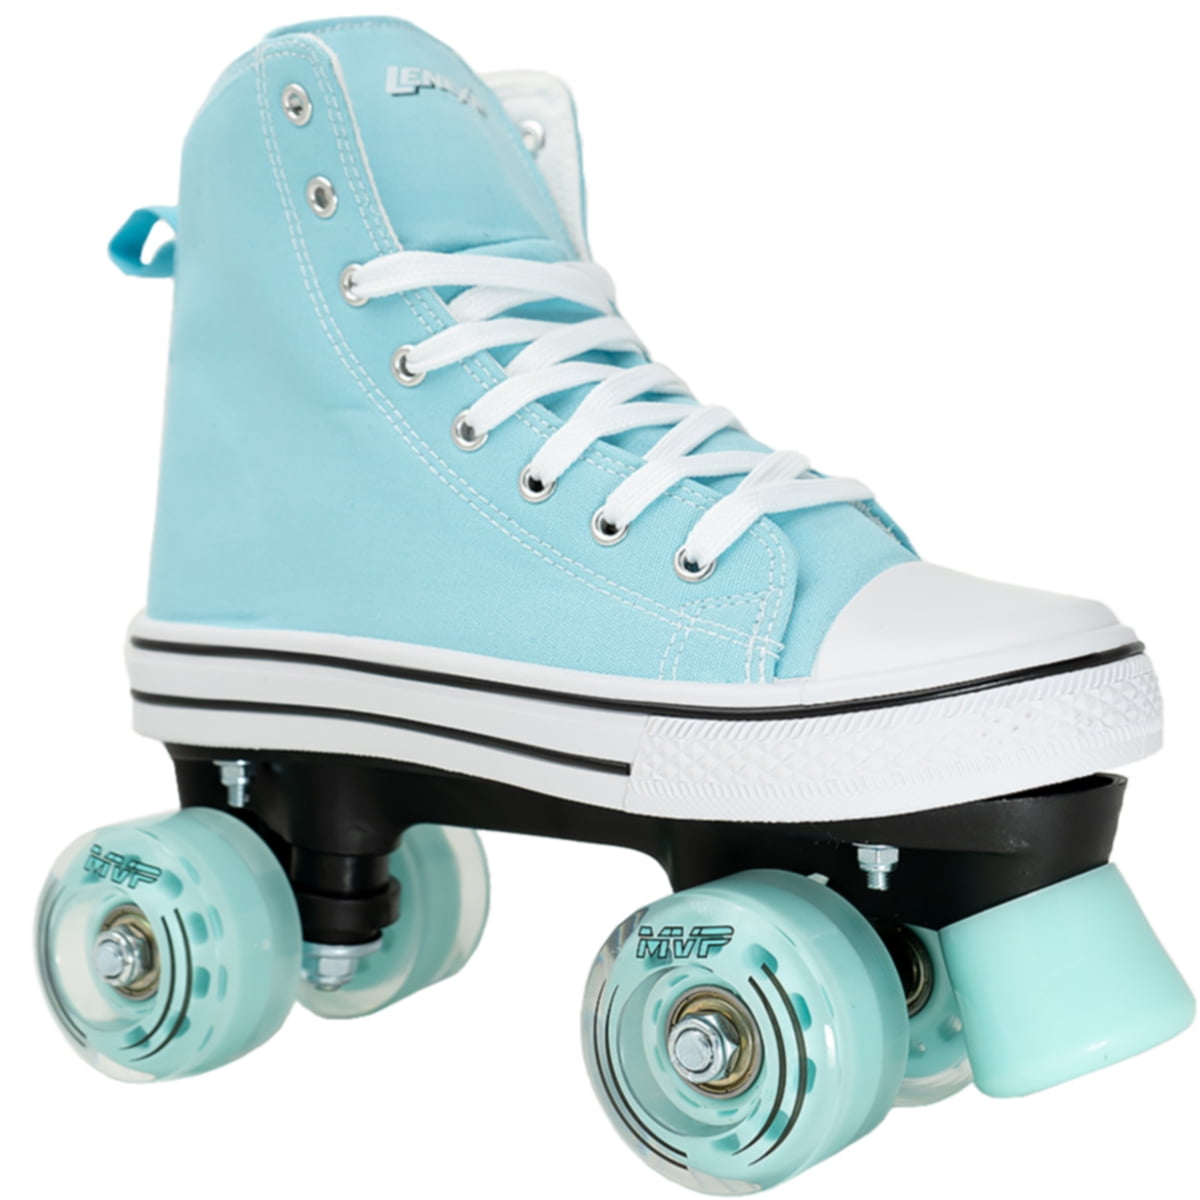 Lenexa Roller Skates for Girls Pixie Unicorn Kids Quad Indoor Outdoor High Top for sale online 